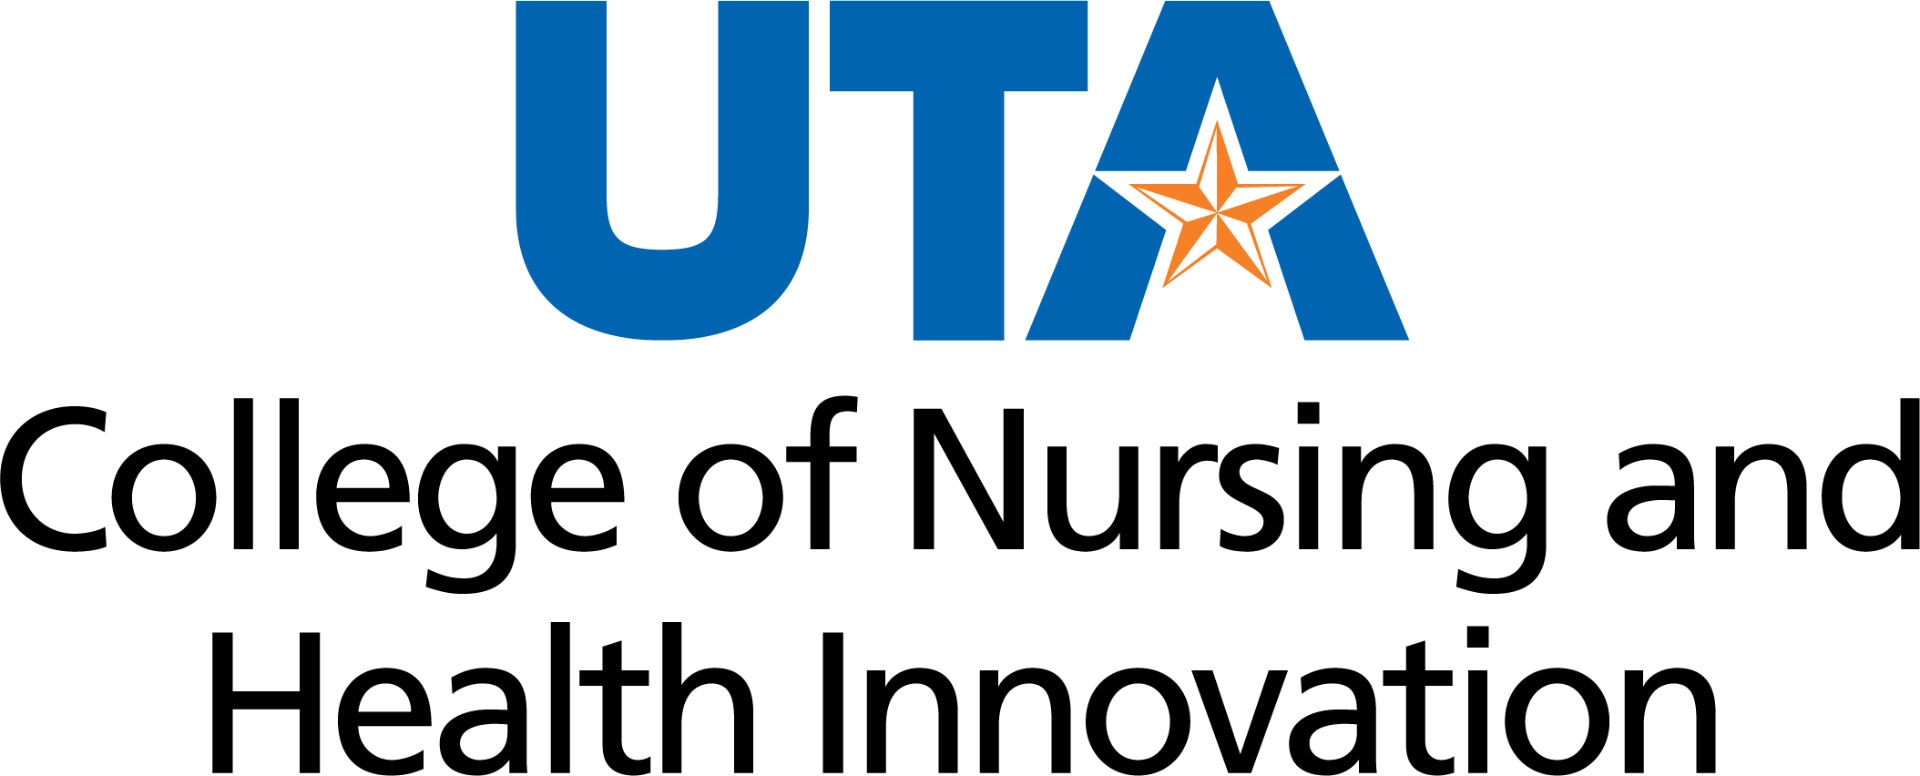 College of Nursing and Health Innovation logo